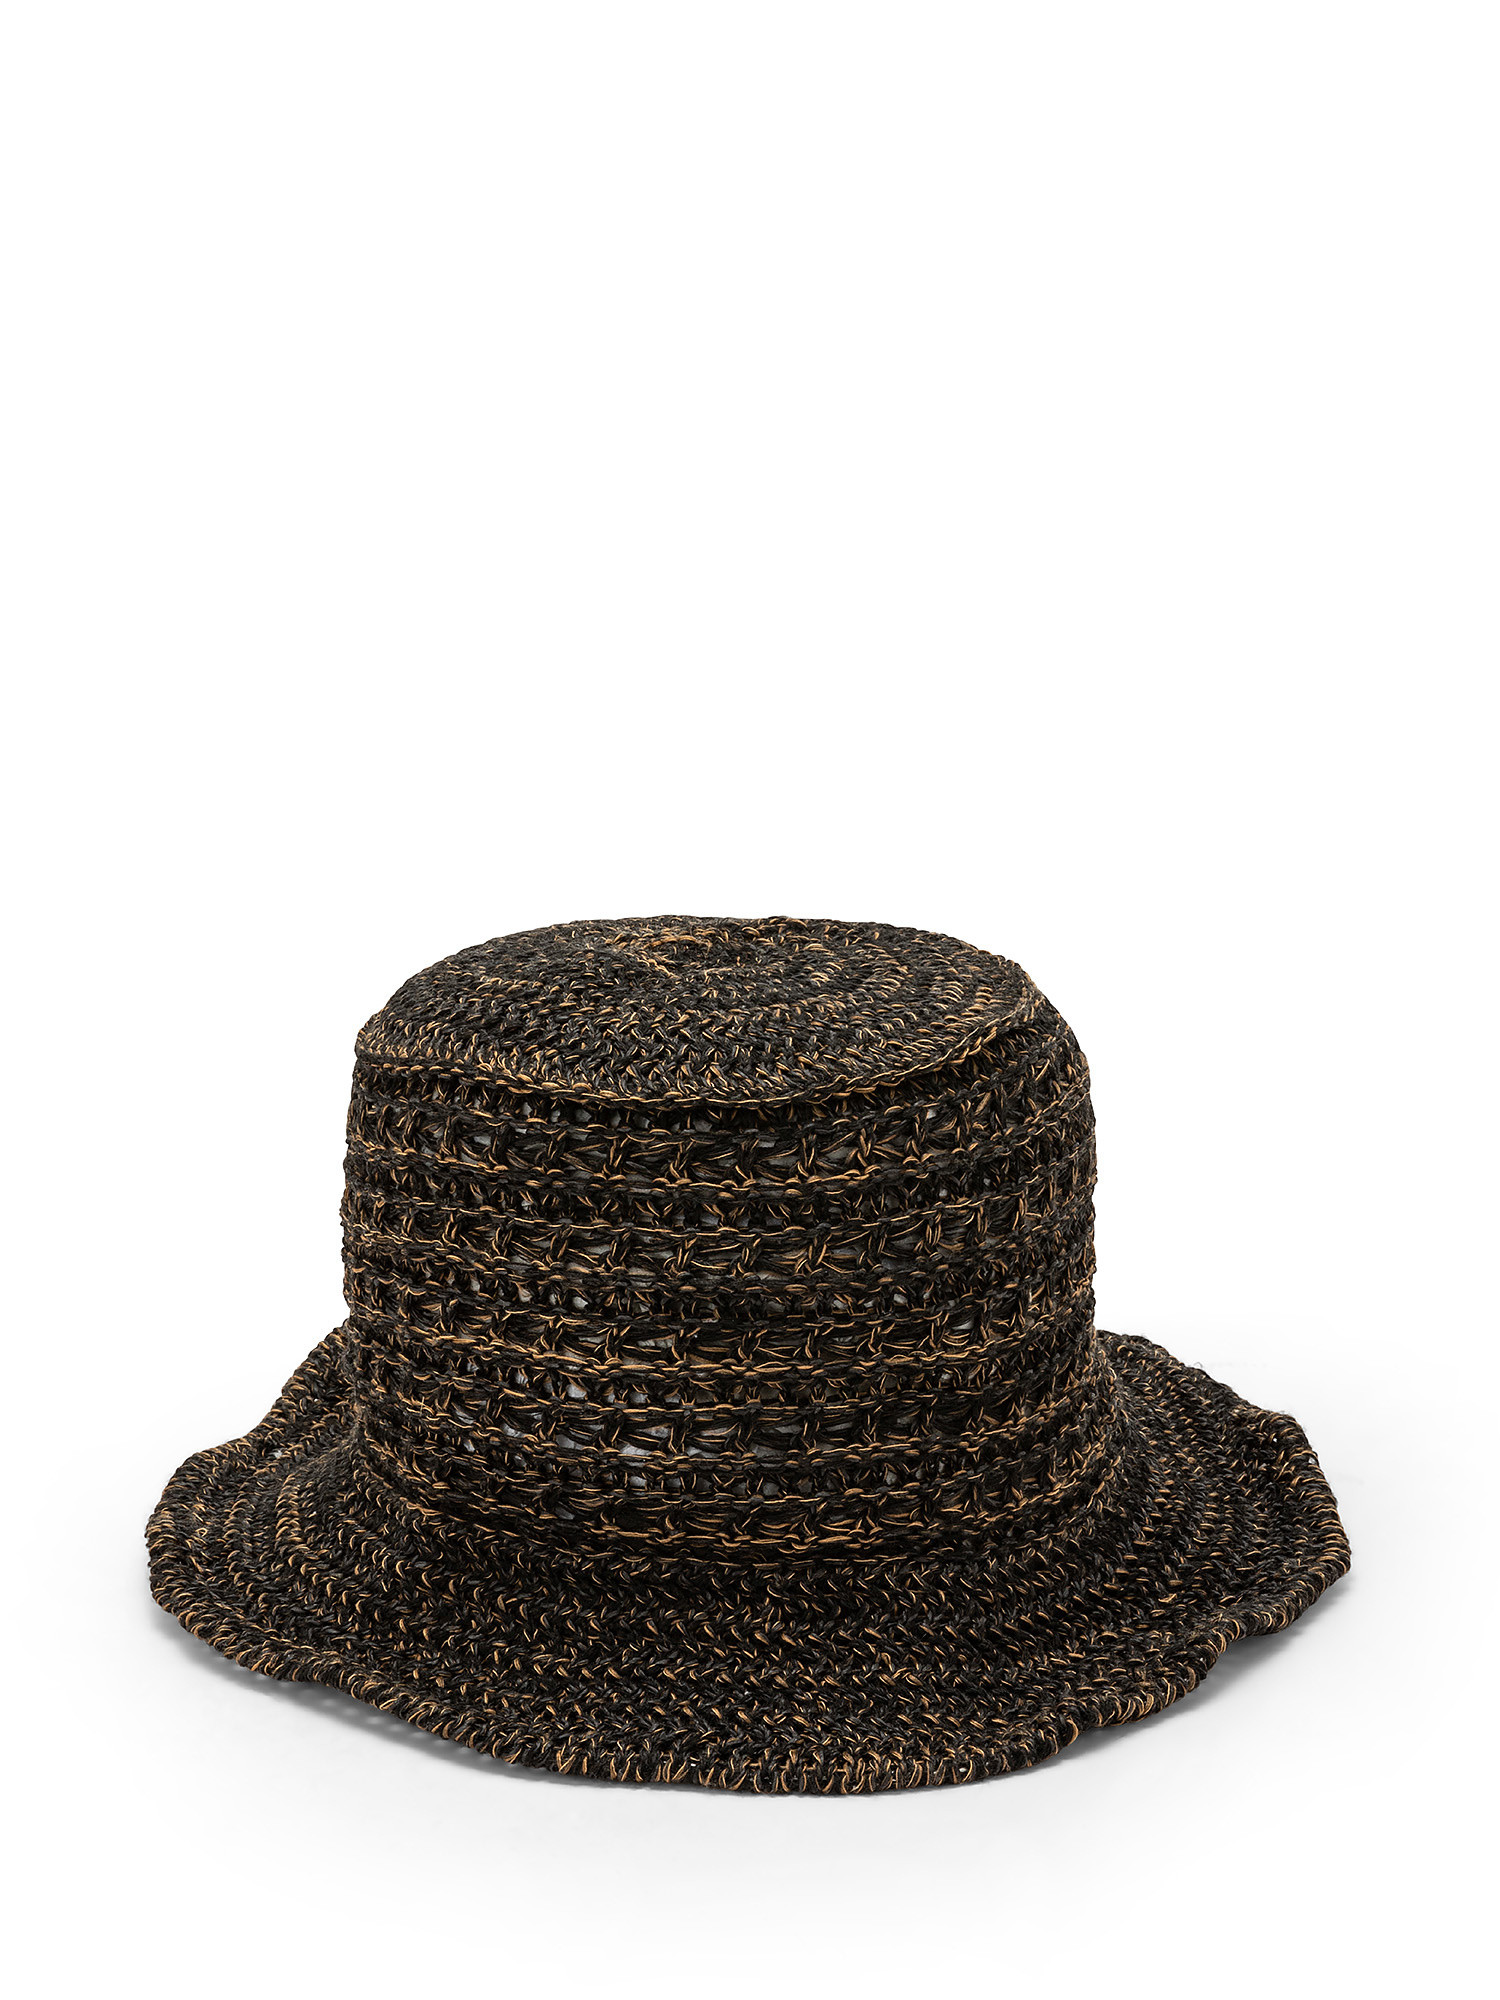 Cappello punto crochet, Nero, large image number 0